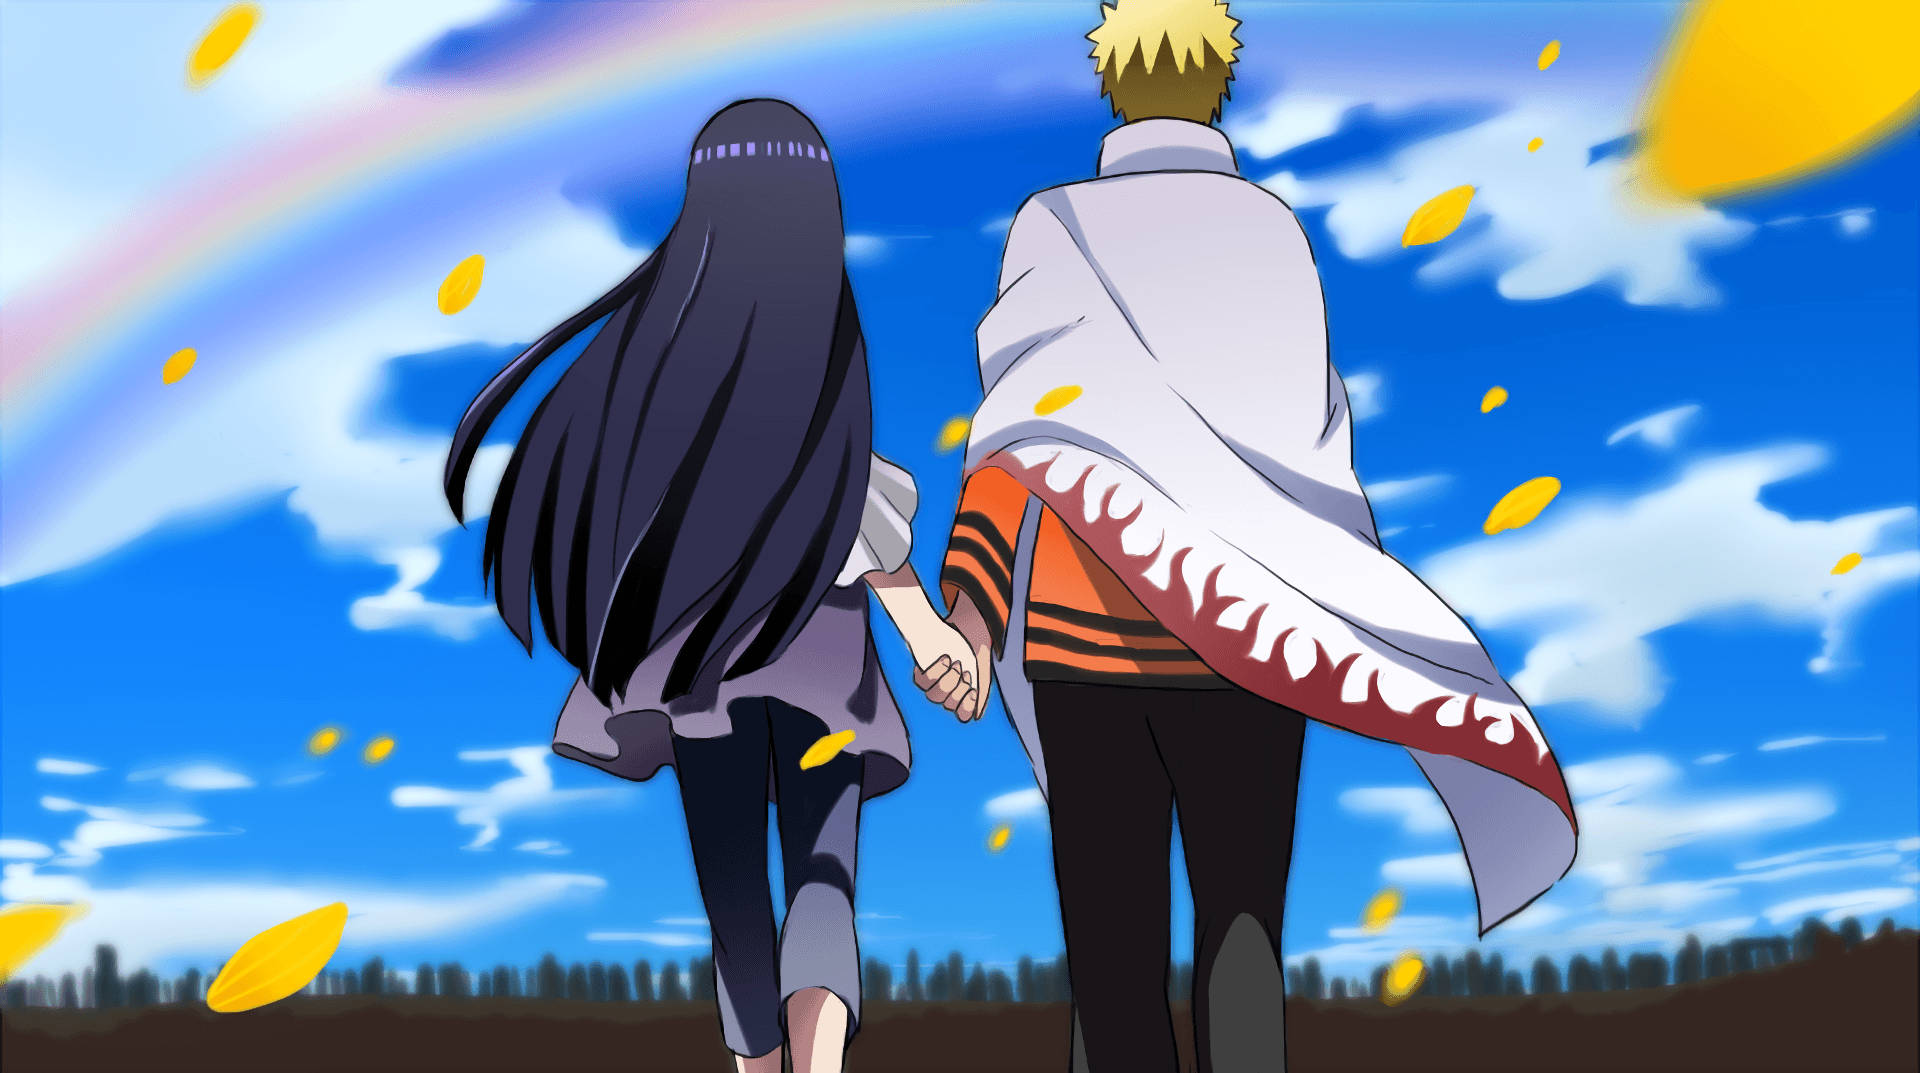 Caption: The Seventh Hokage - Uzumaki Naruto With Hinata Hyuga Background